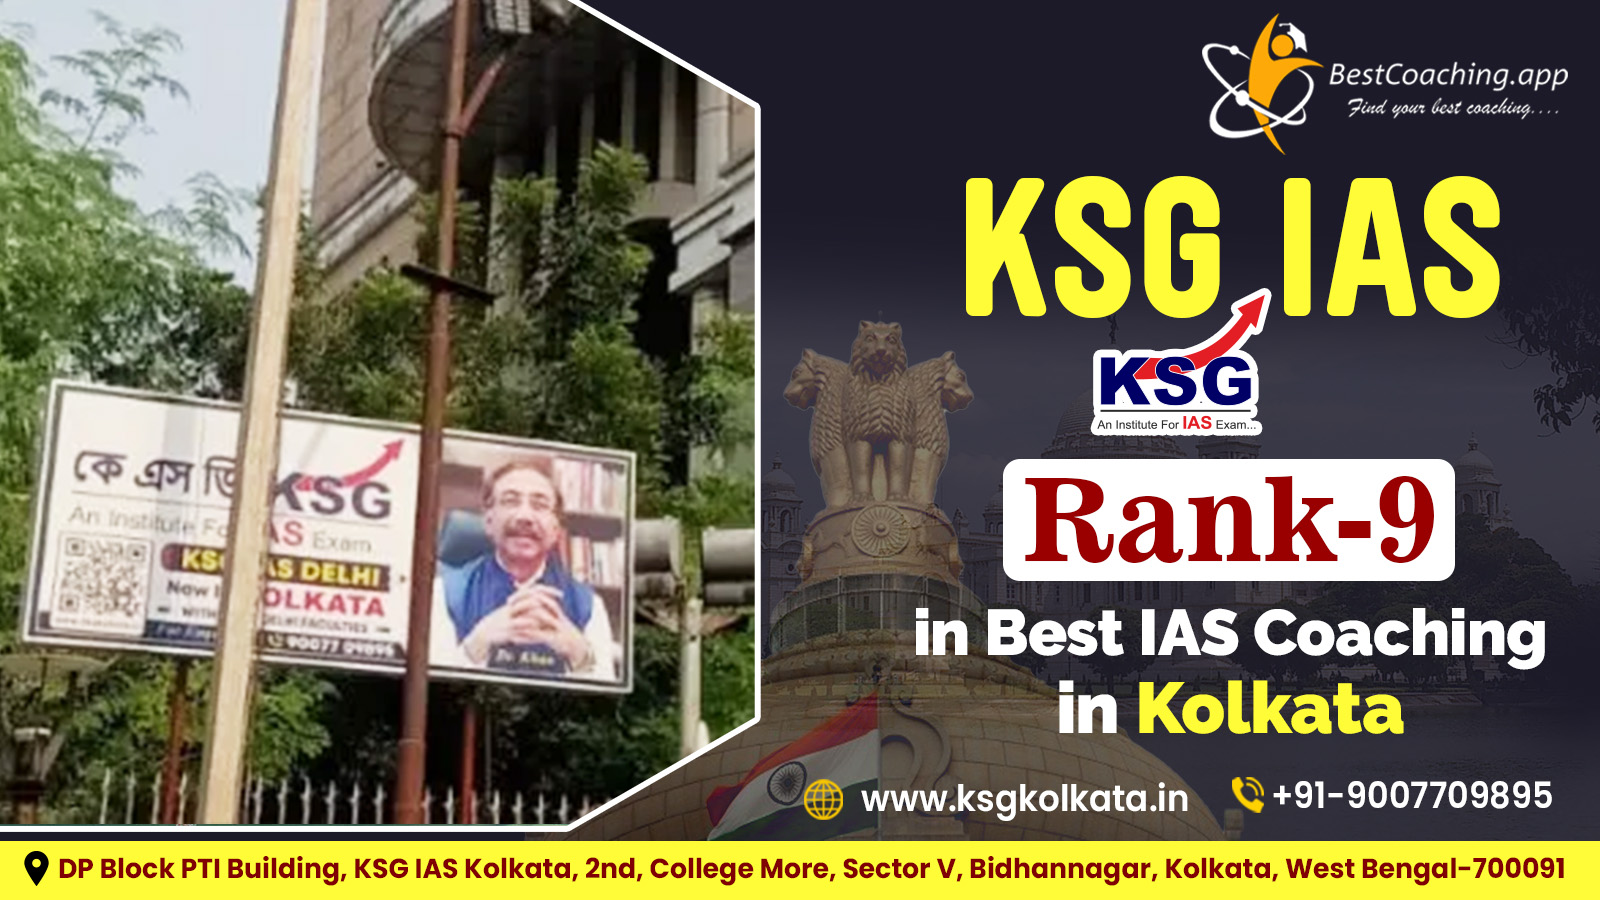 KSG IAS Rank 9 in Best IAS Coaching in Kolkata